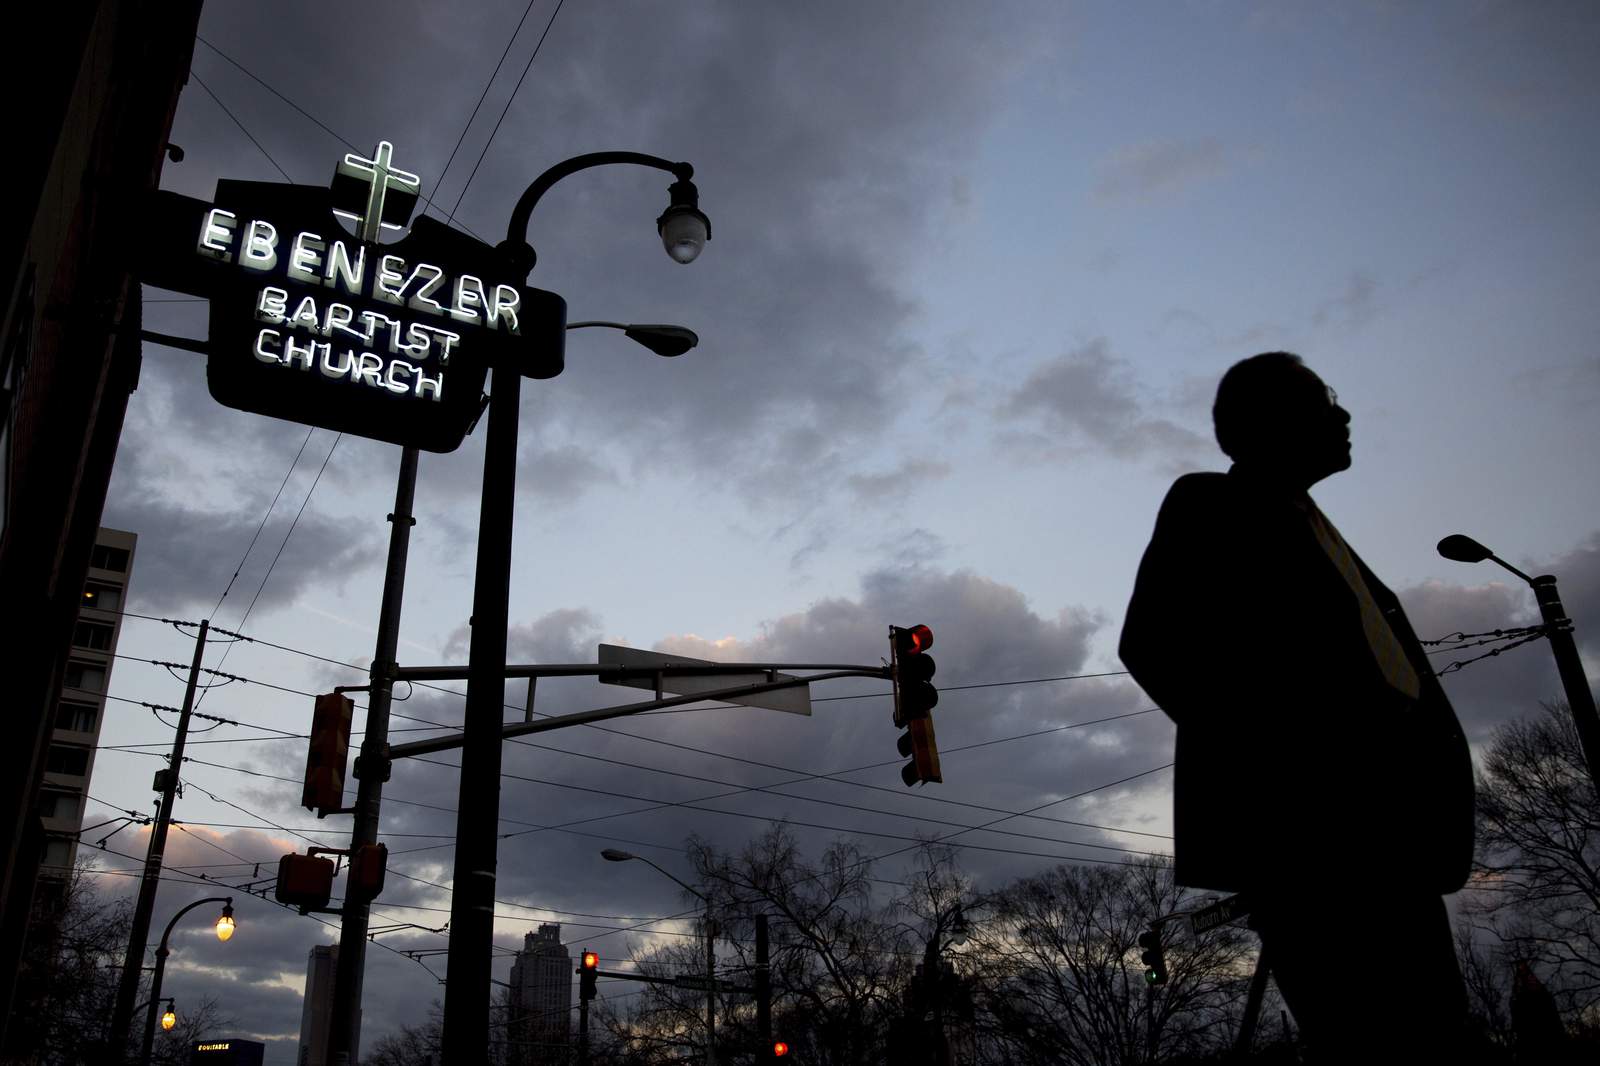 Senate race thrusts 'Black America's church' into spotlight